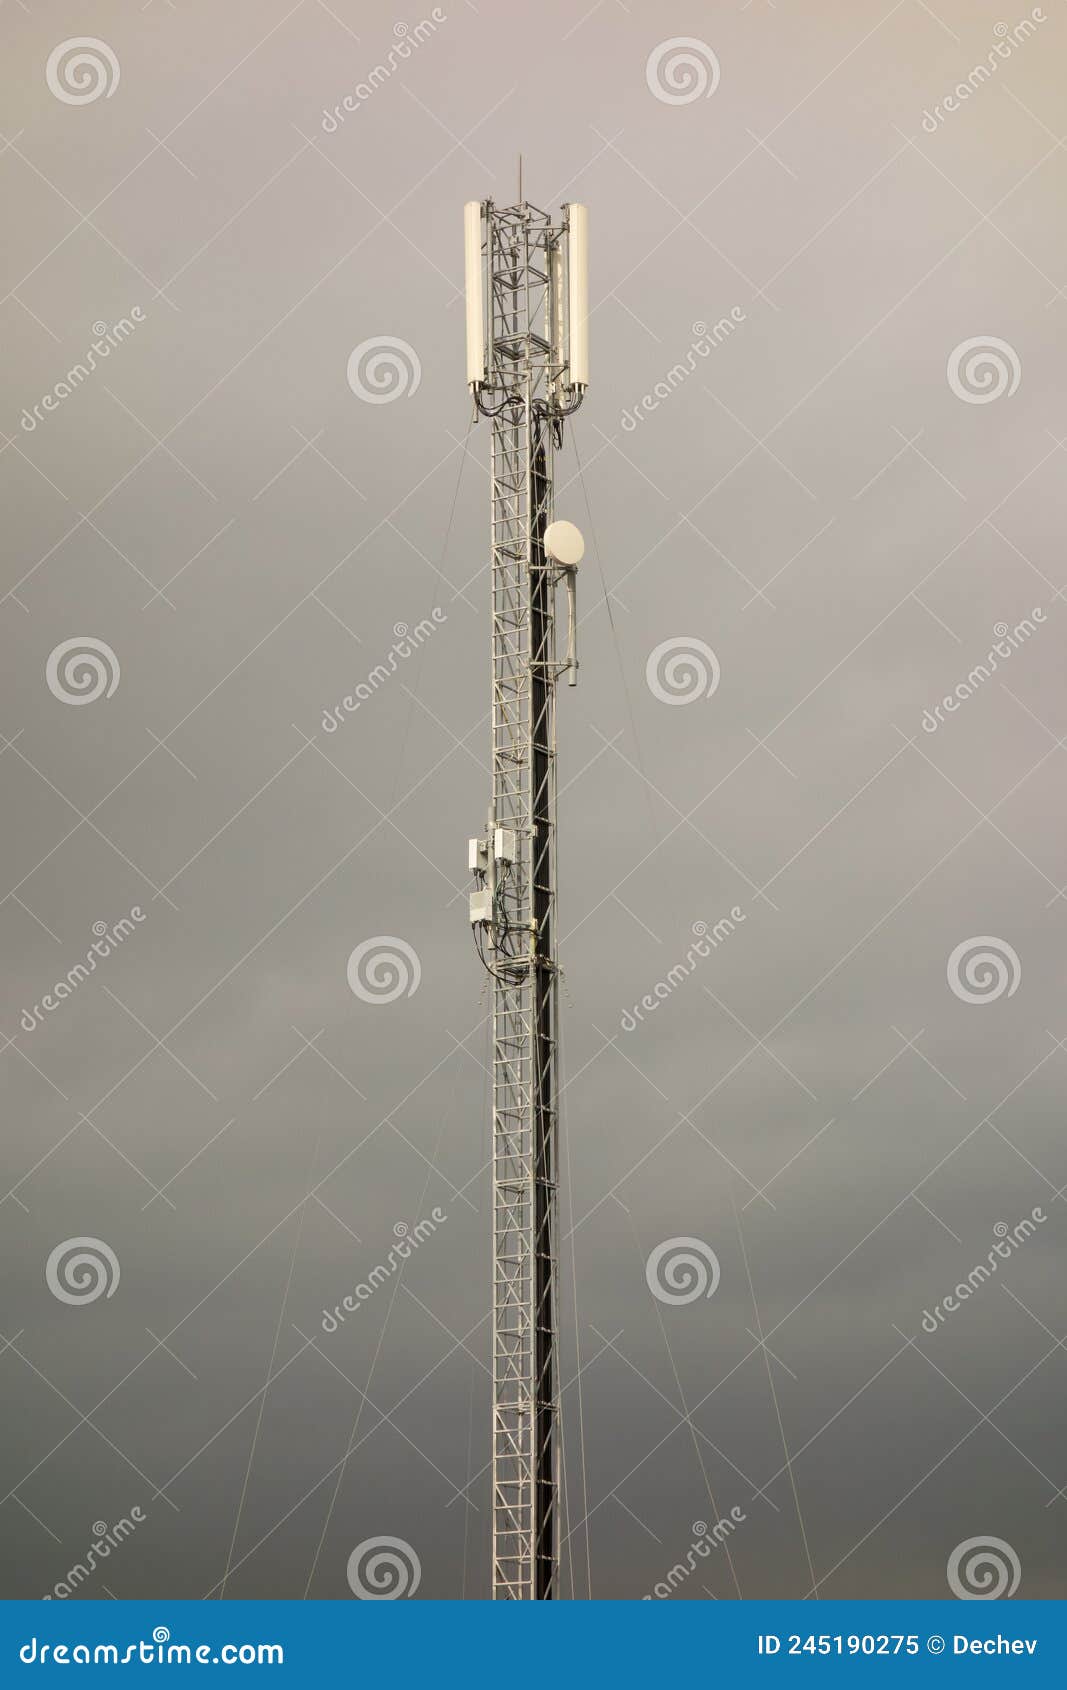 telecommunications tower. comunication industry antena